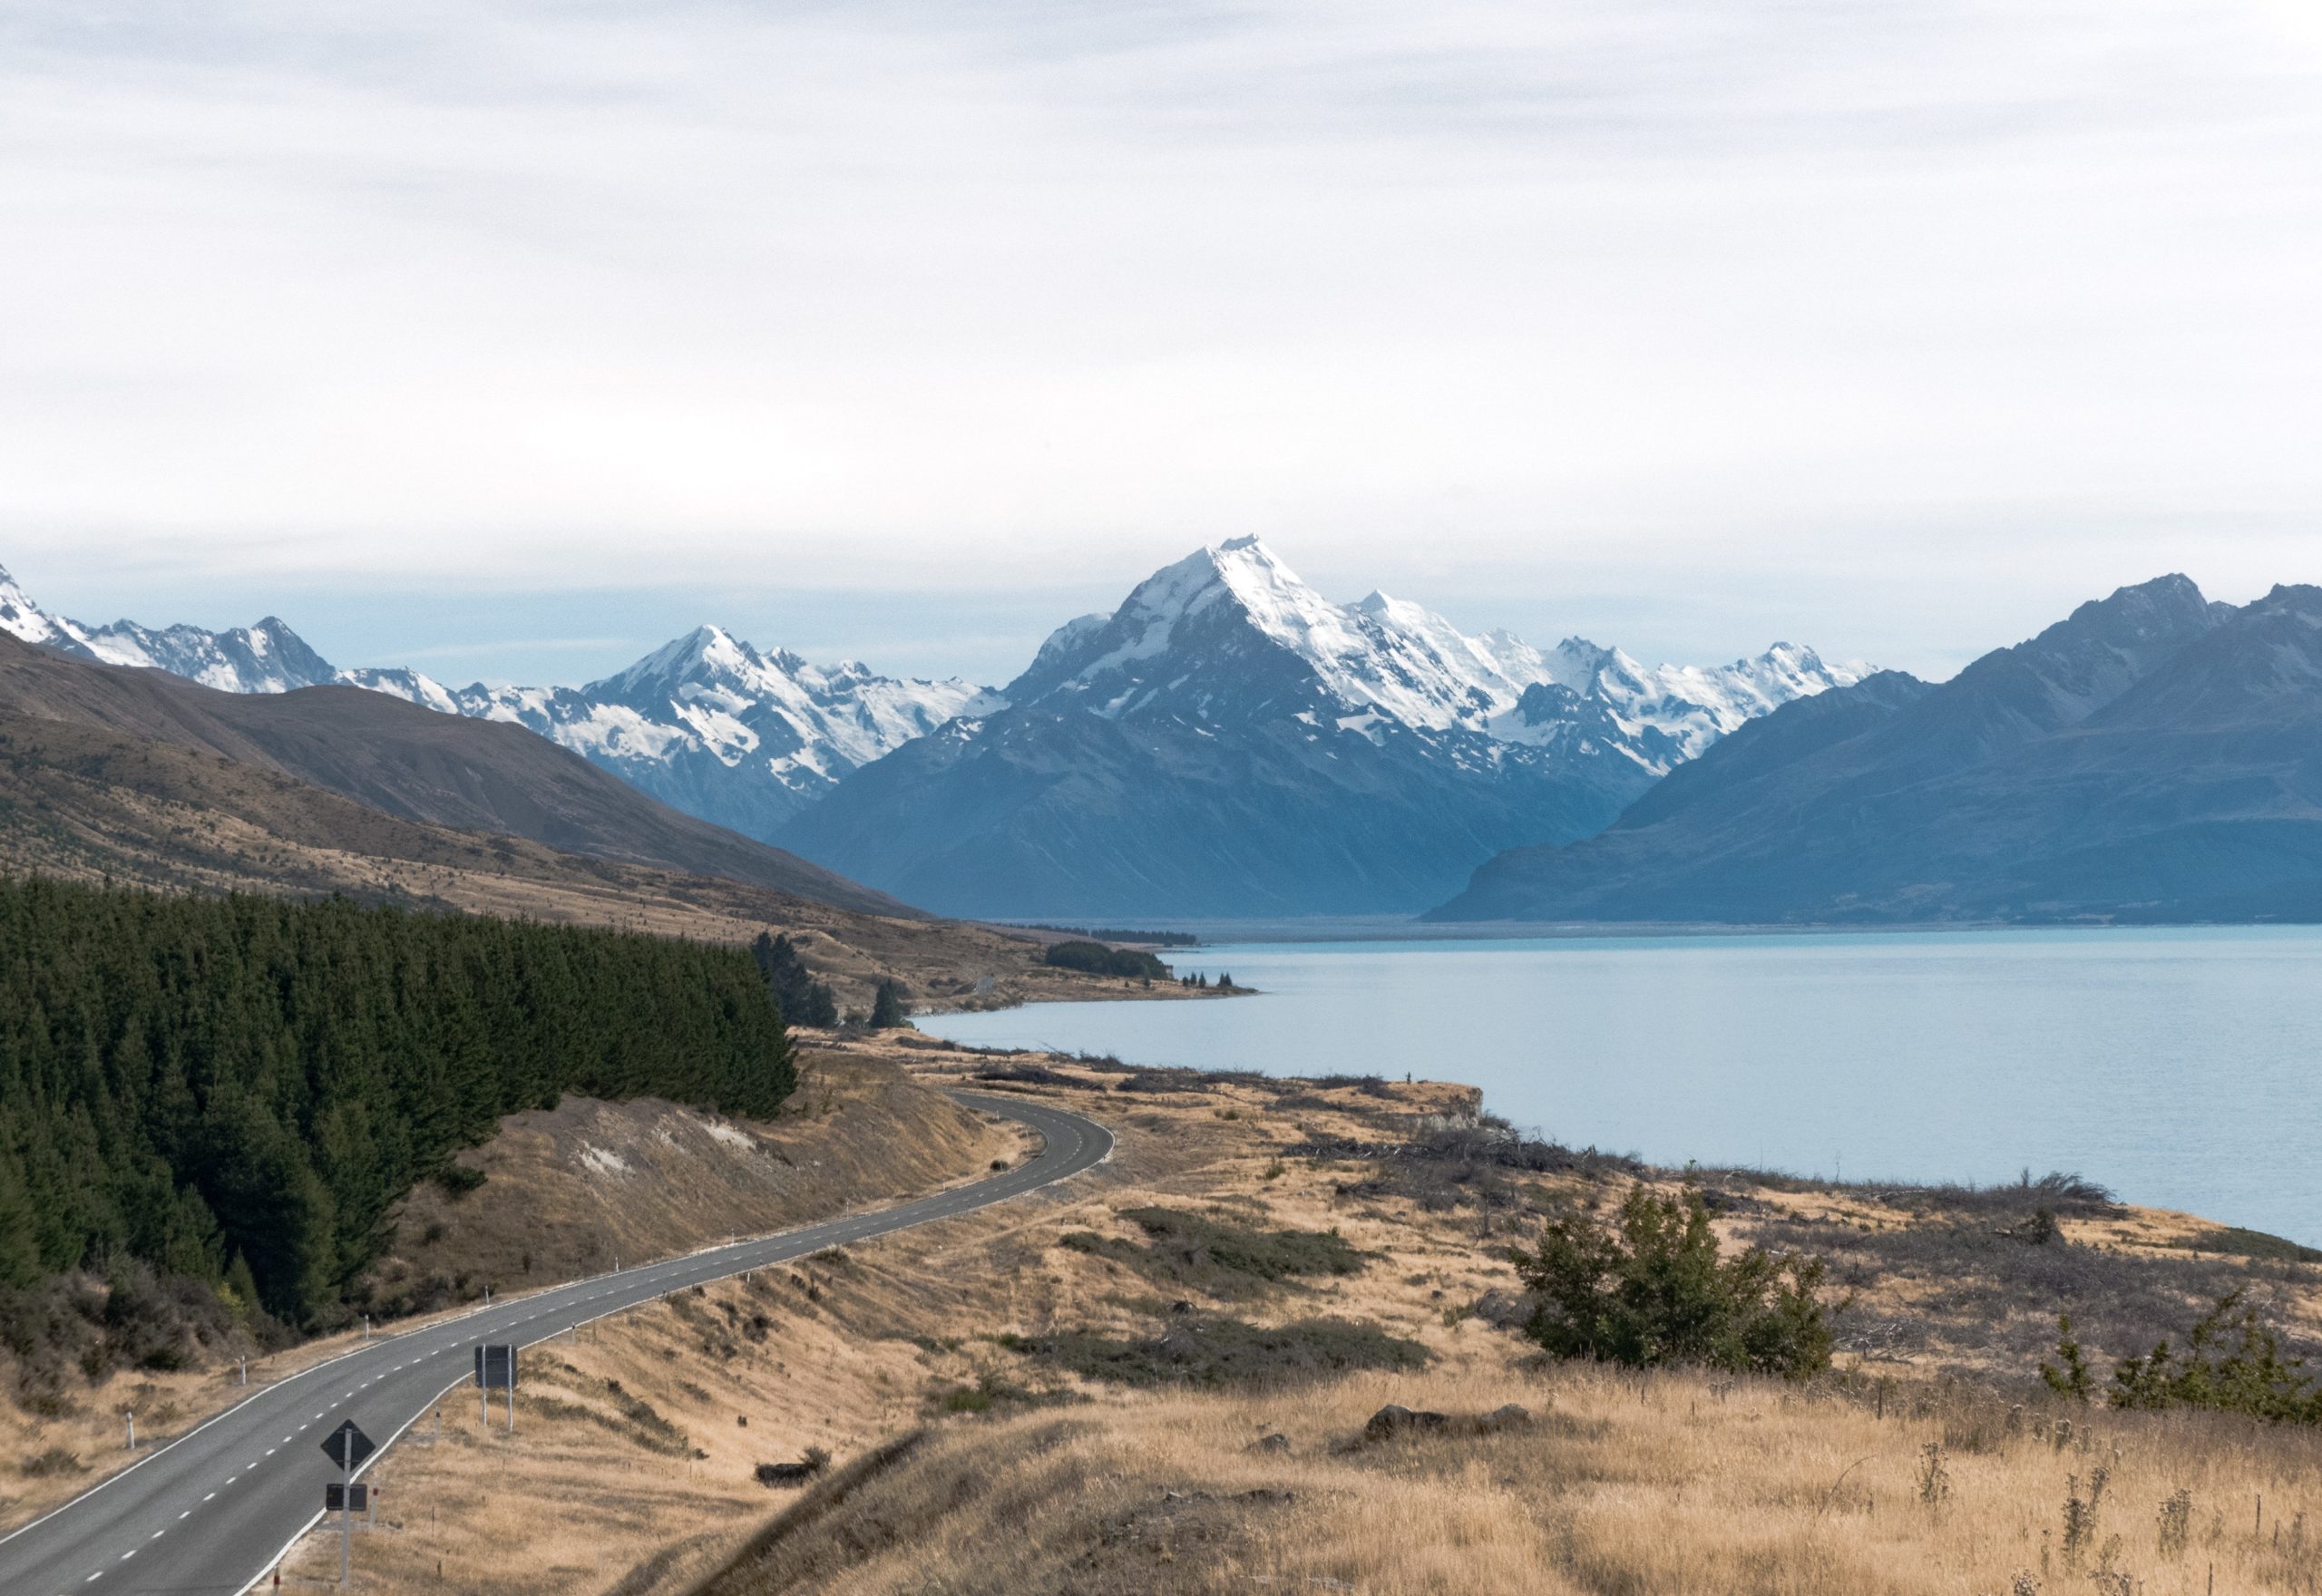 A winding road through New Zealand landscape